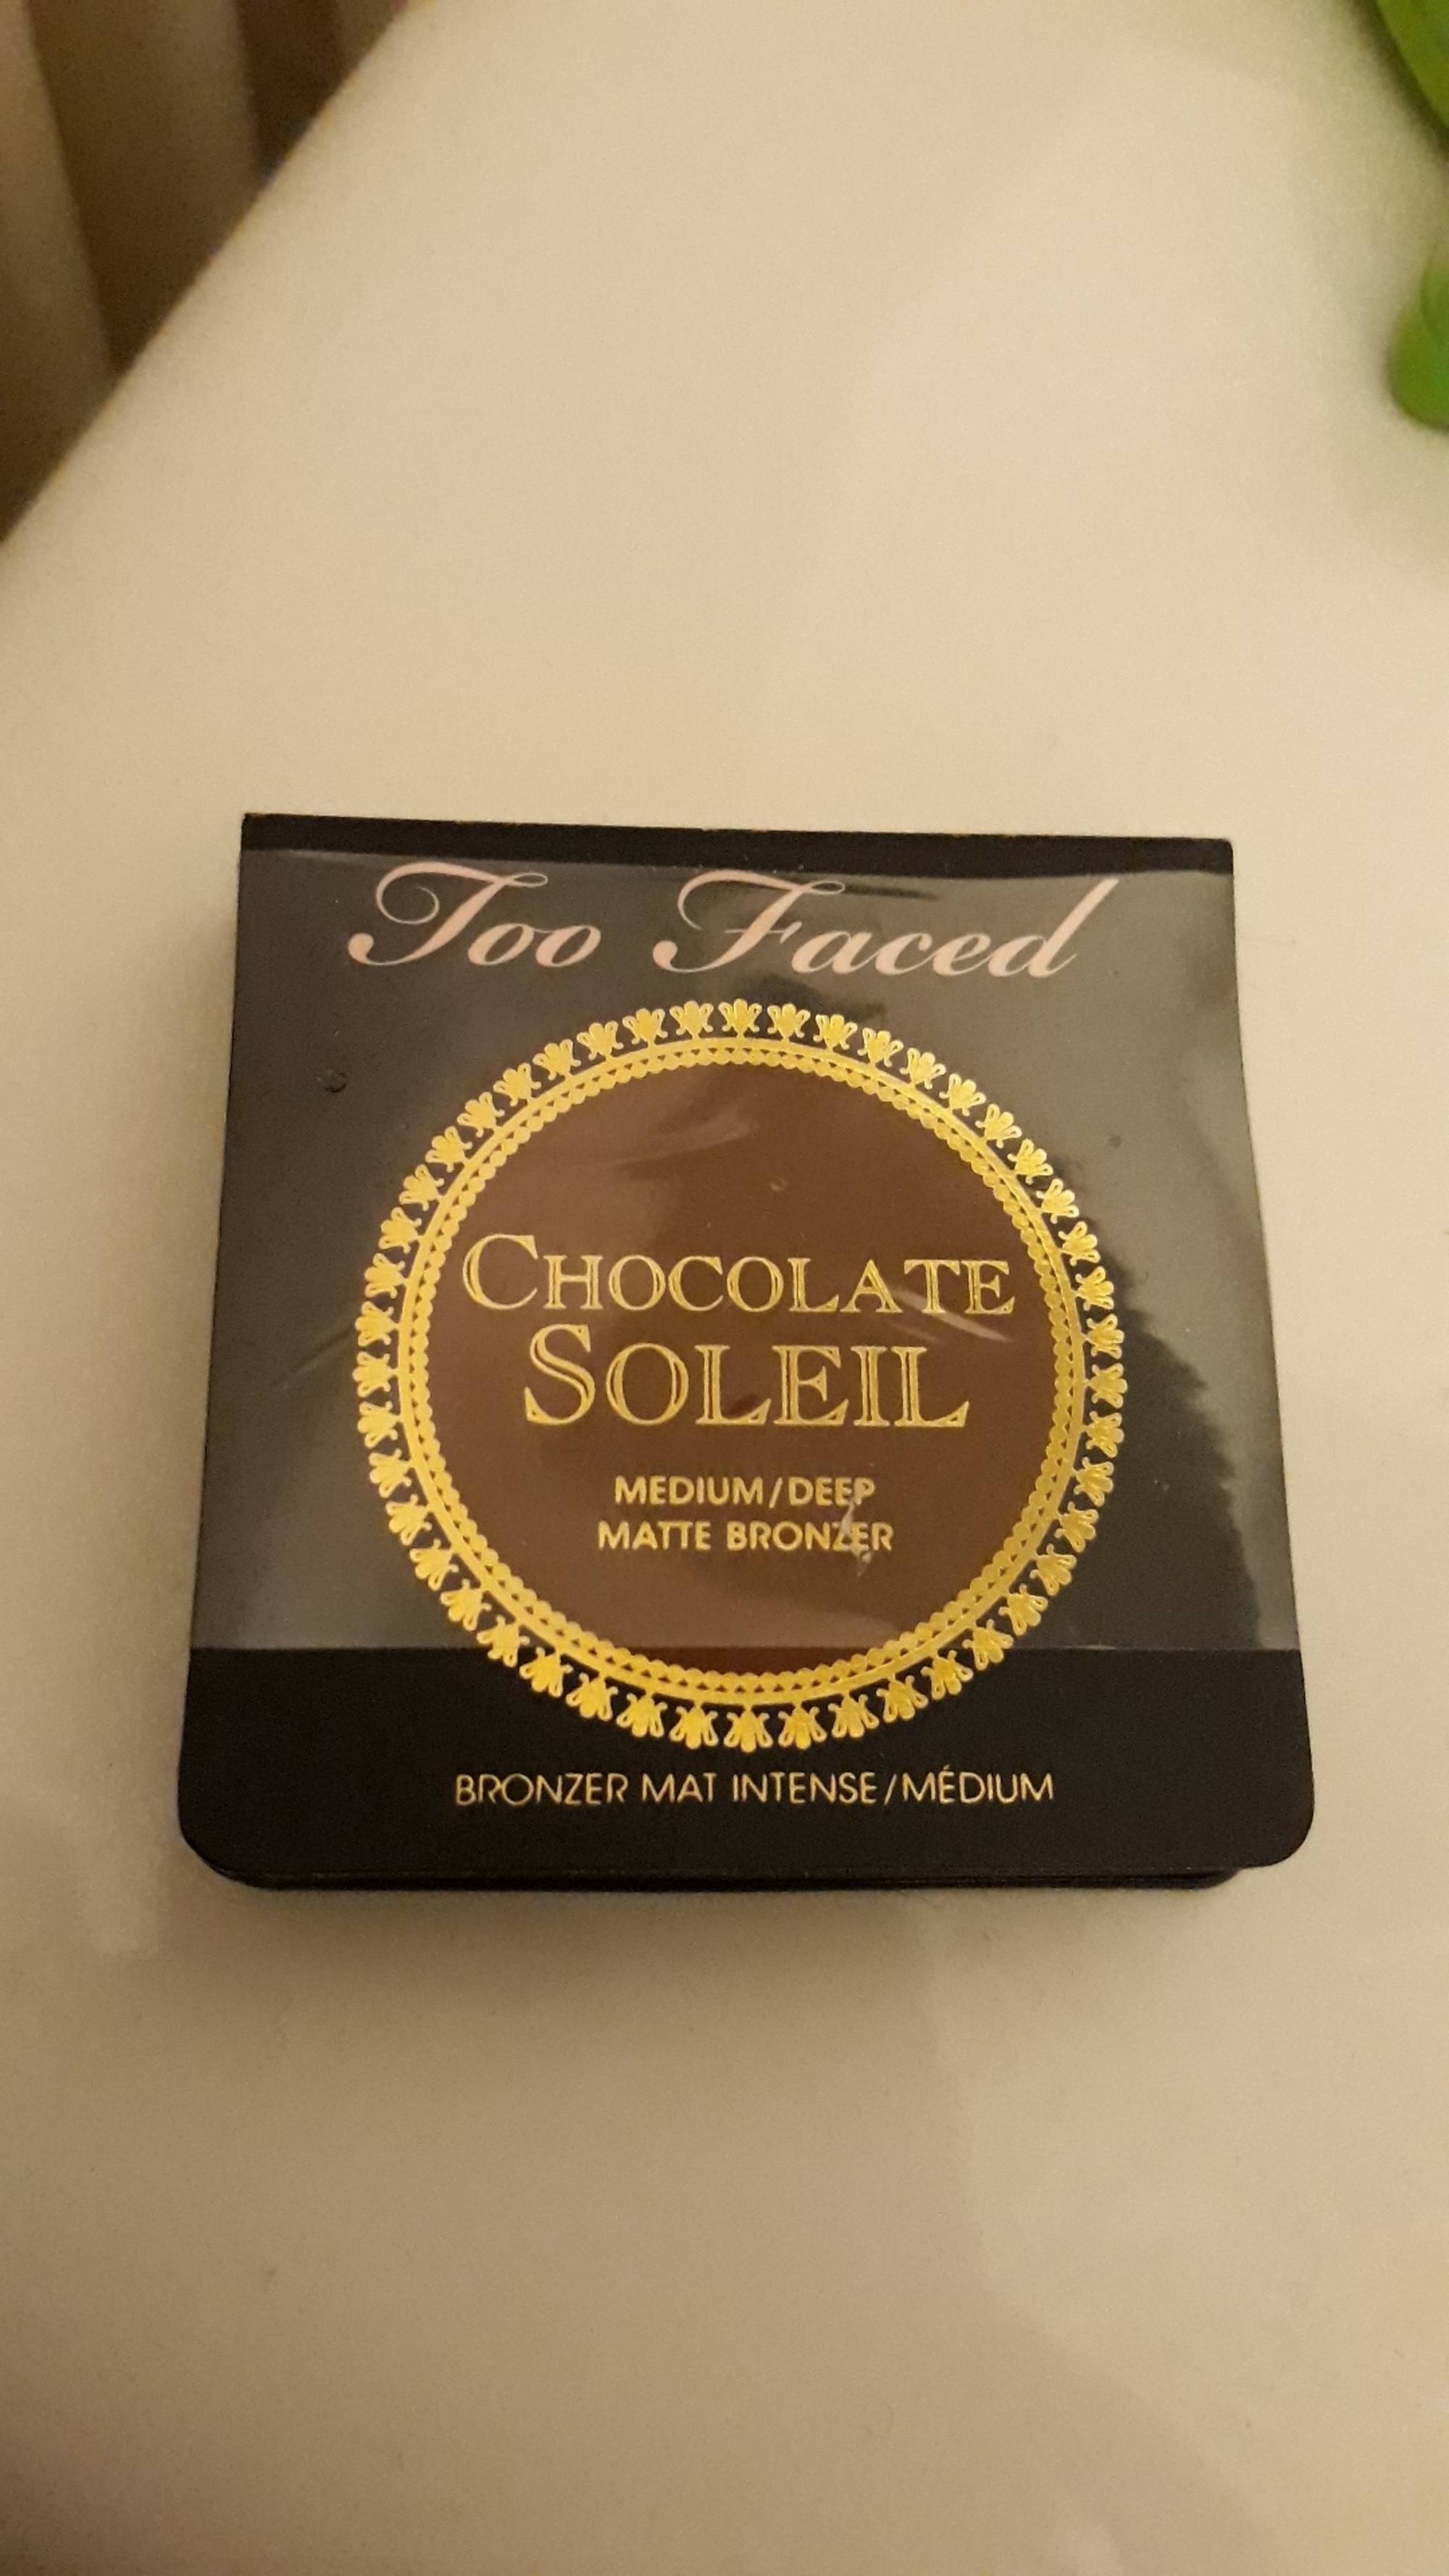 TOO FACED - Chocolate soleil - Medium deep matte bronzer